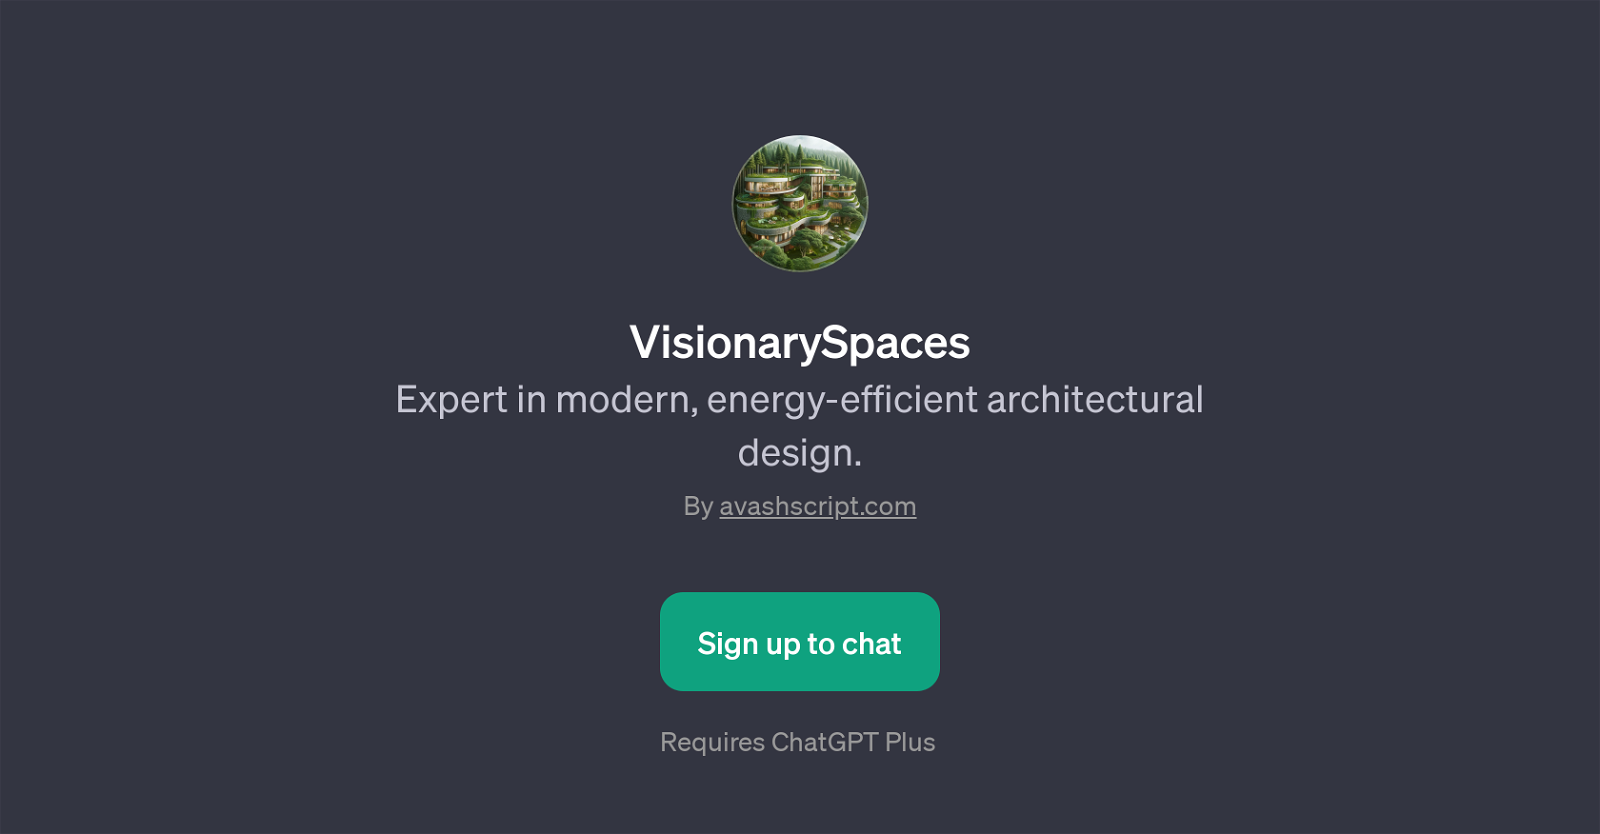 VisionarySpaces website